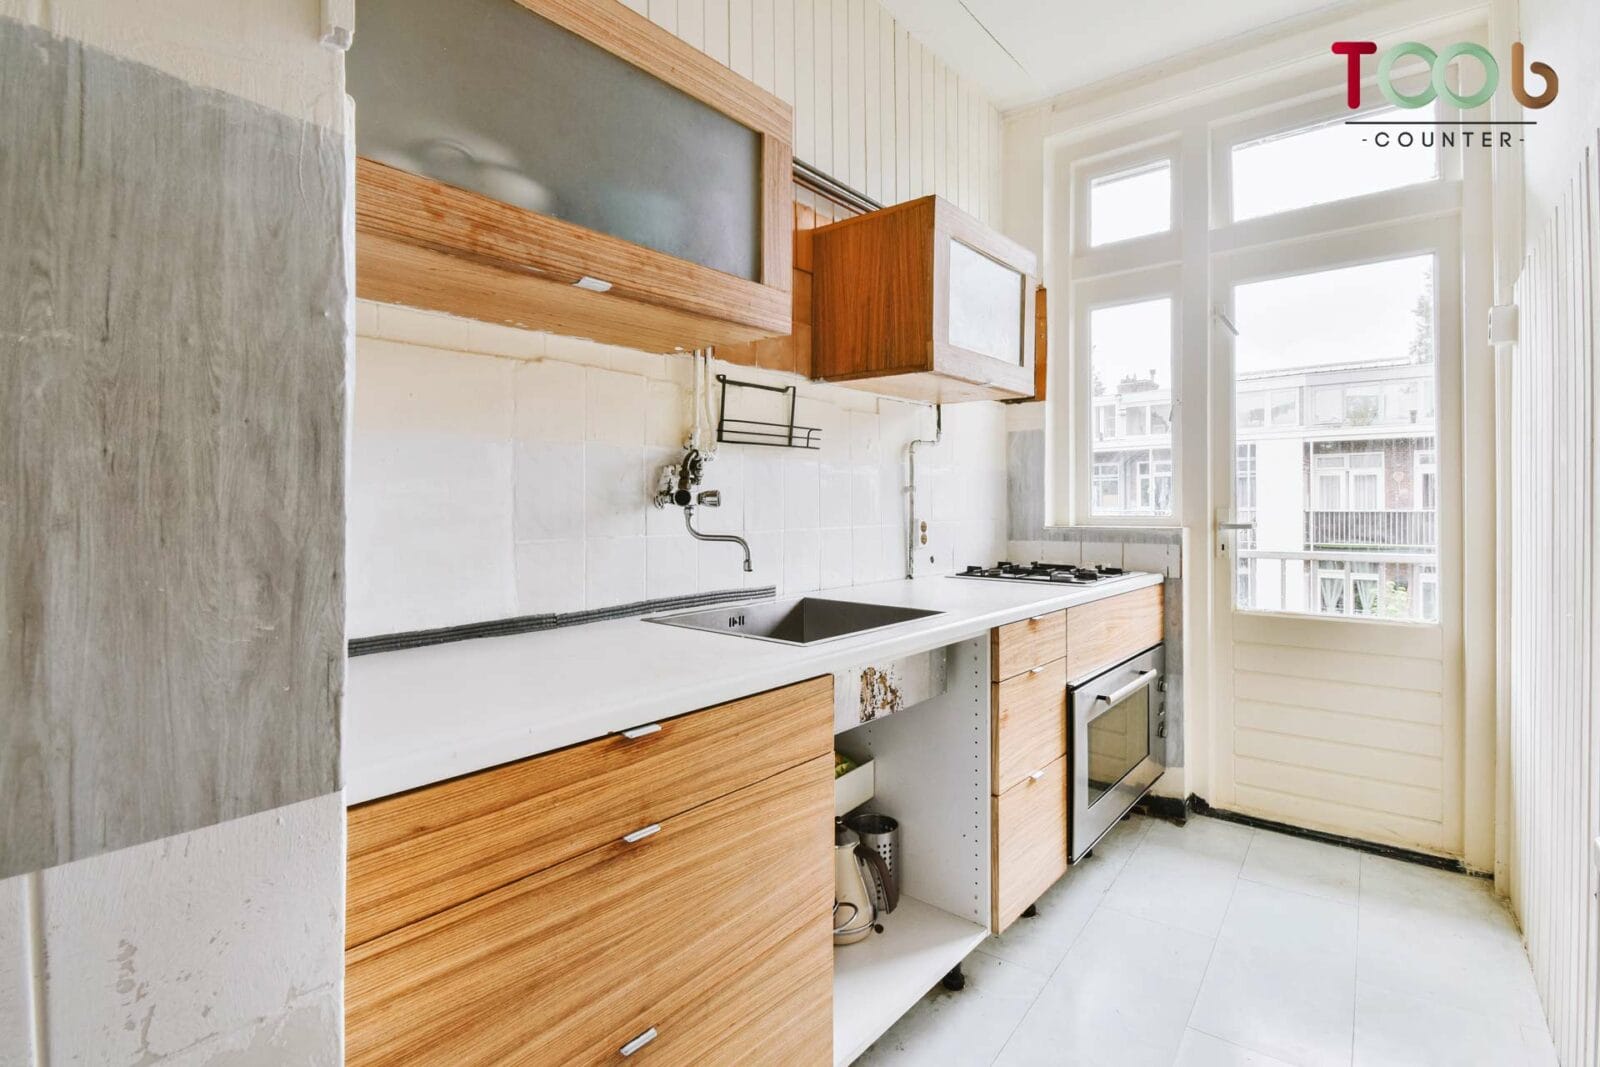 3. Wooden kitchen counter white top